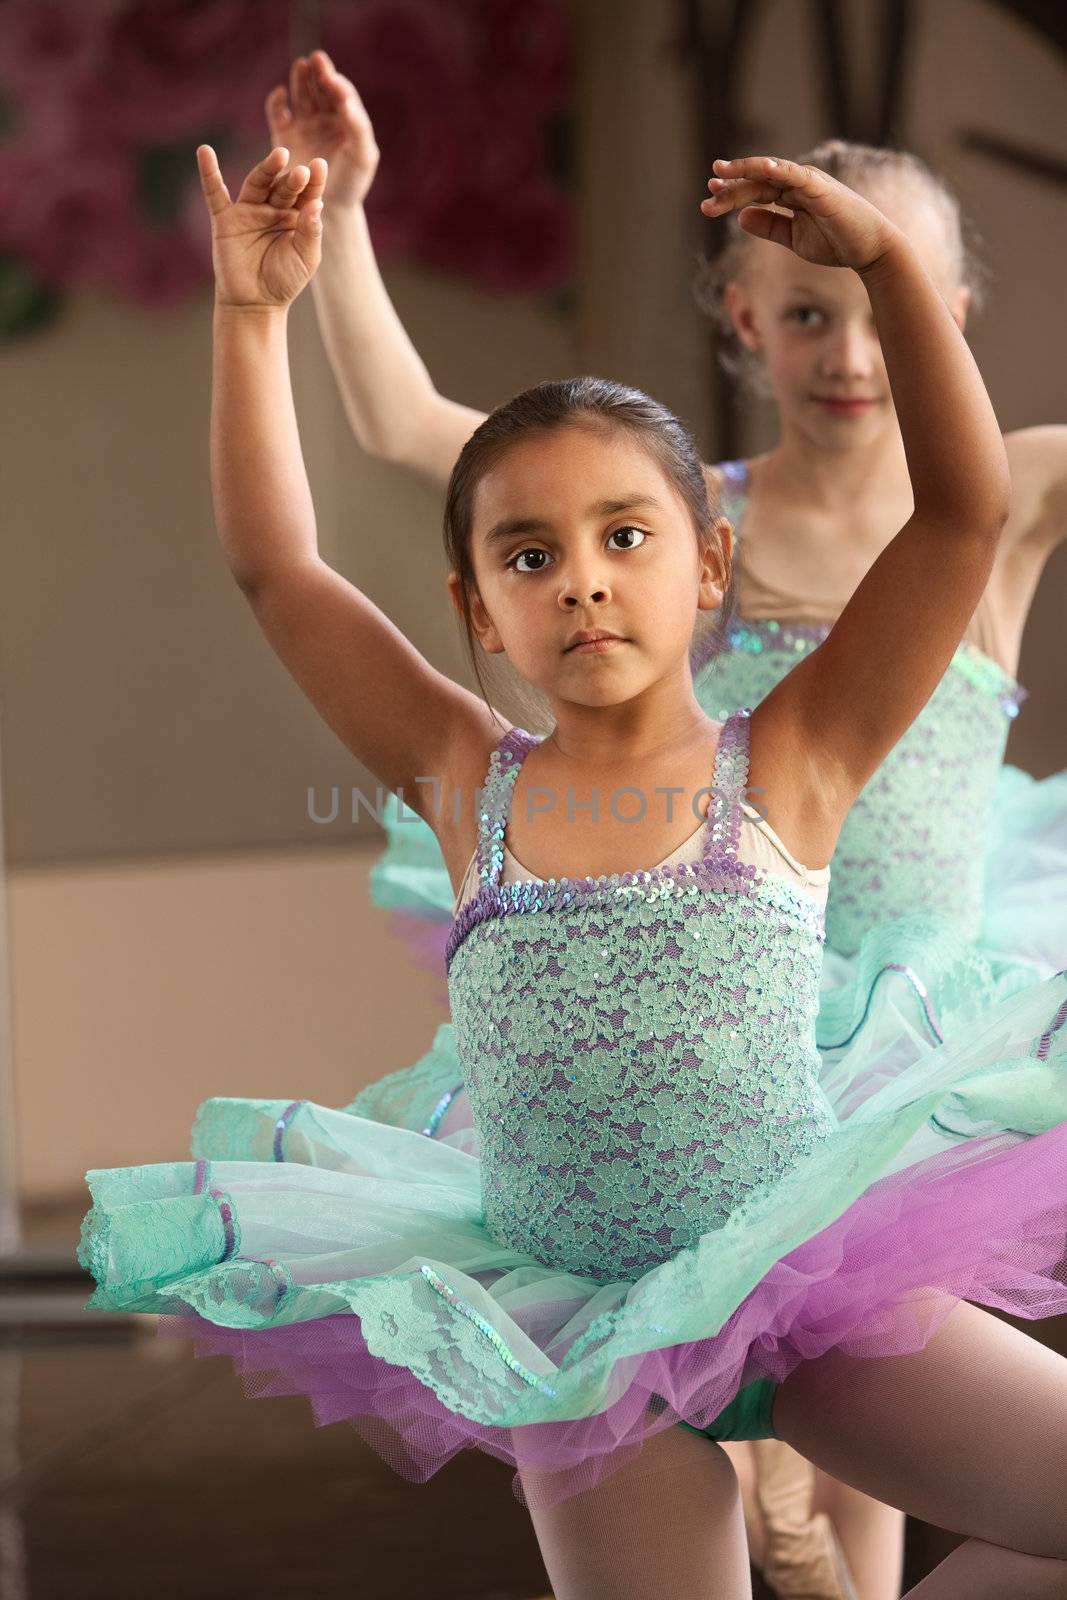 Cute little girls in ballet dresses practice in a studio